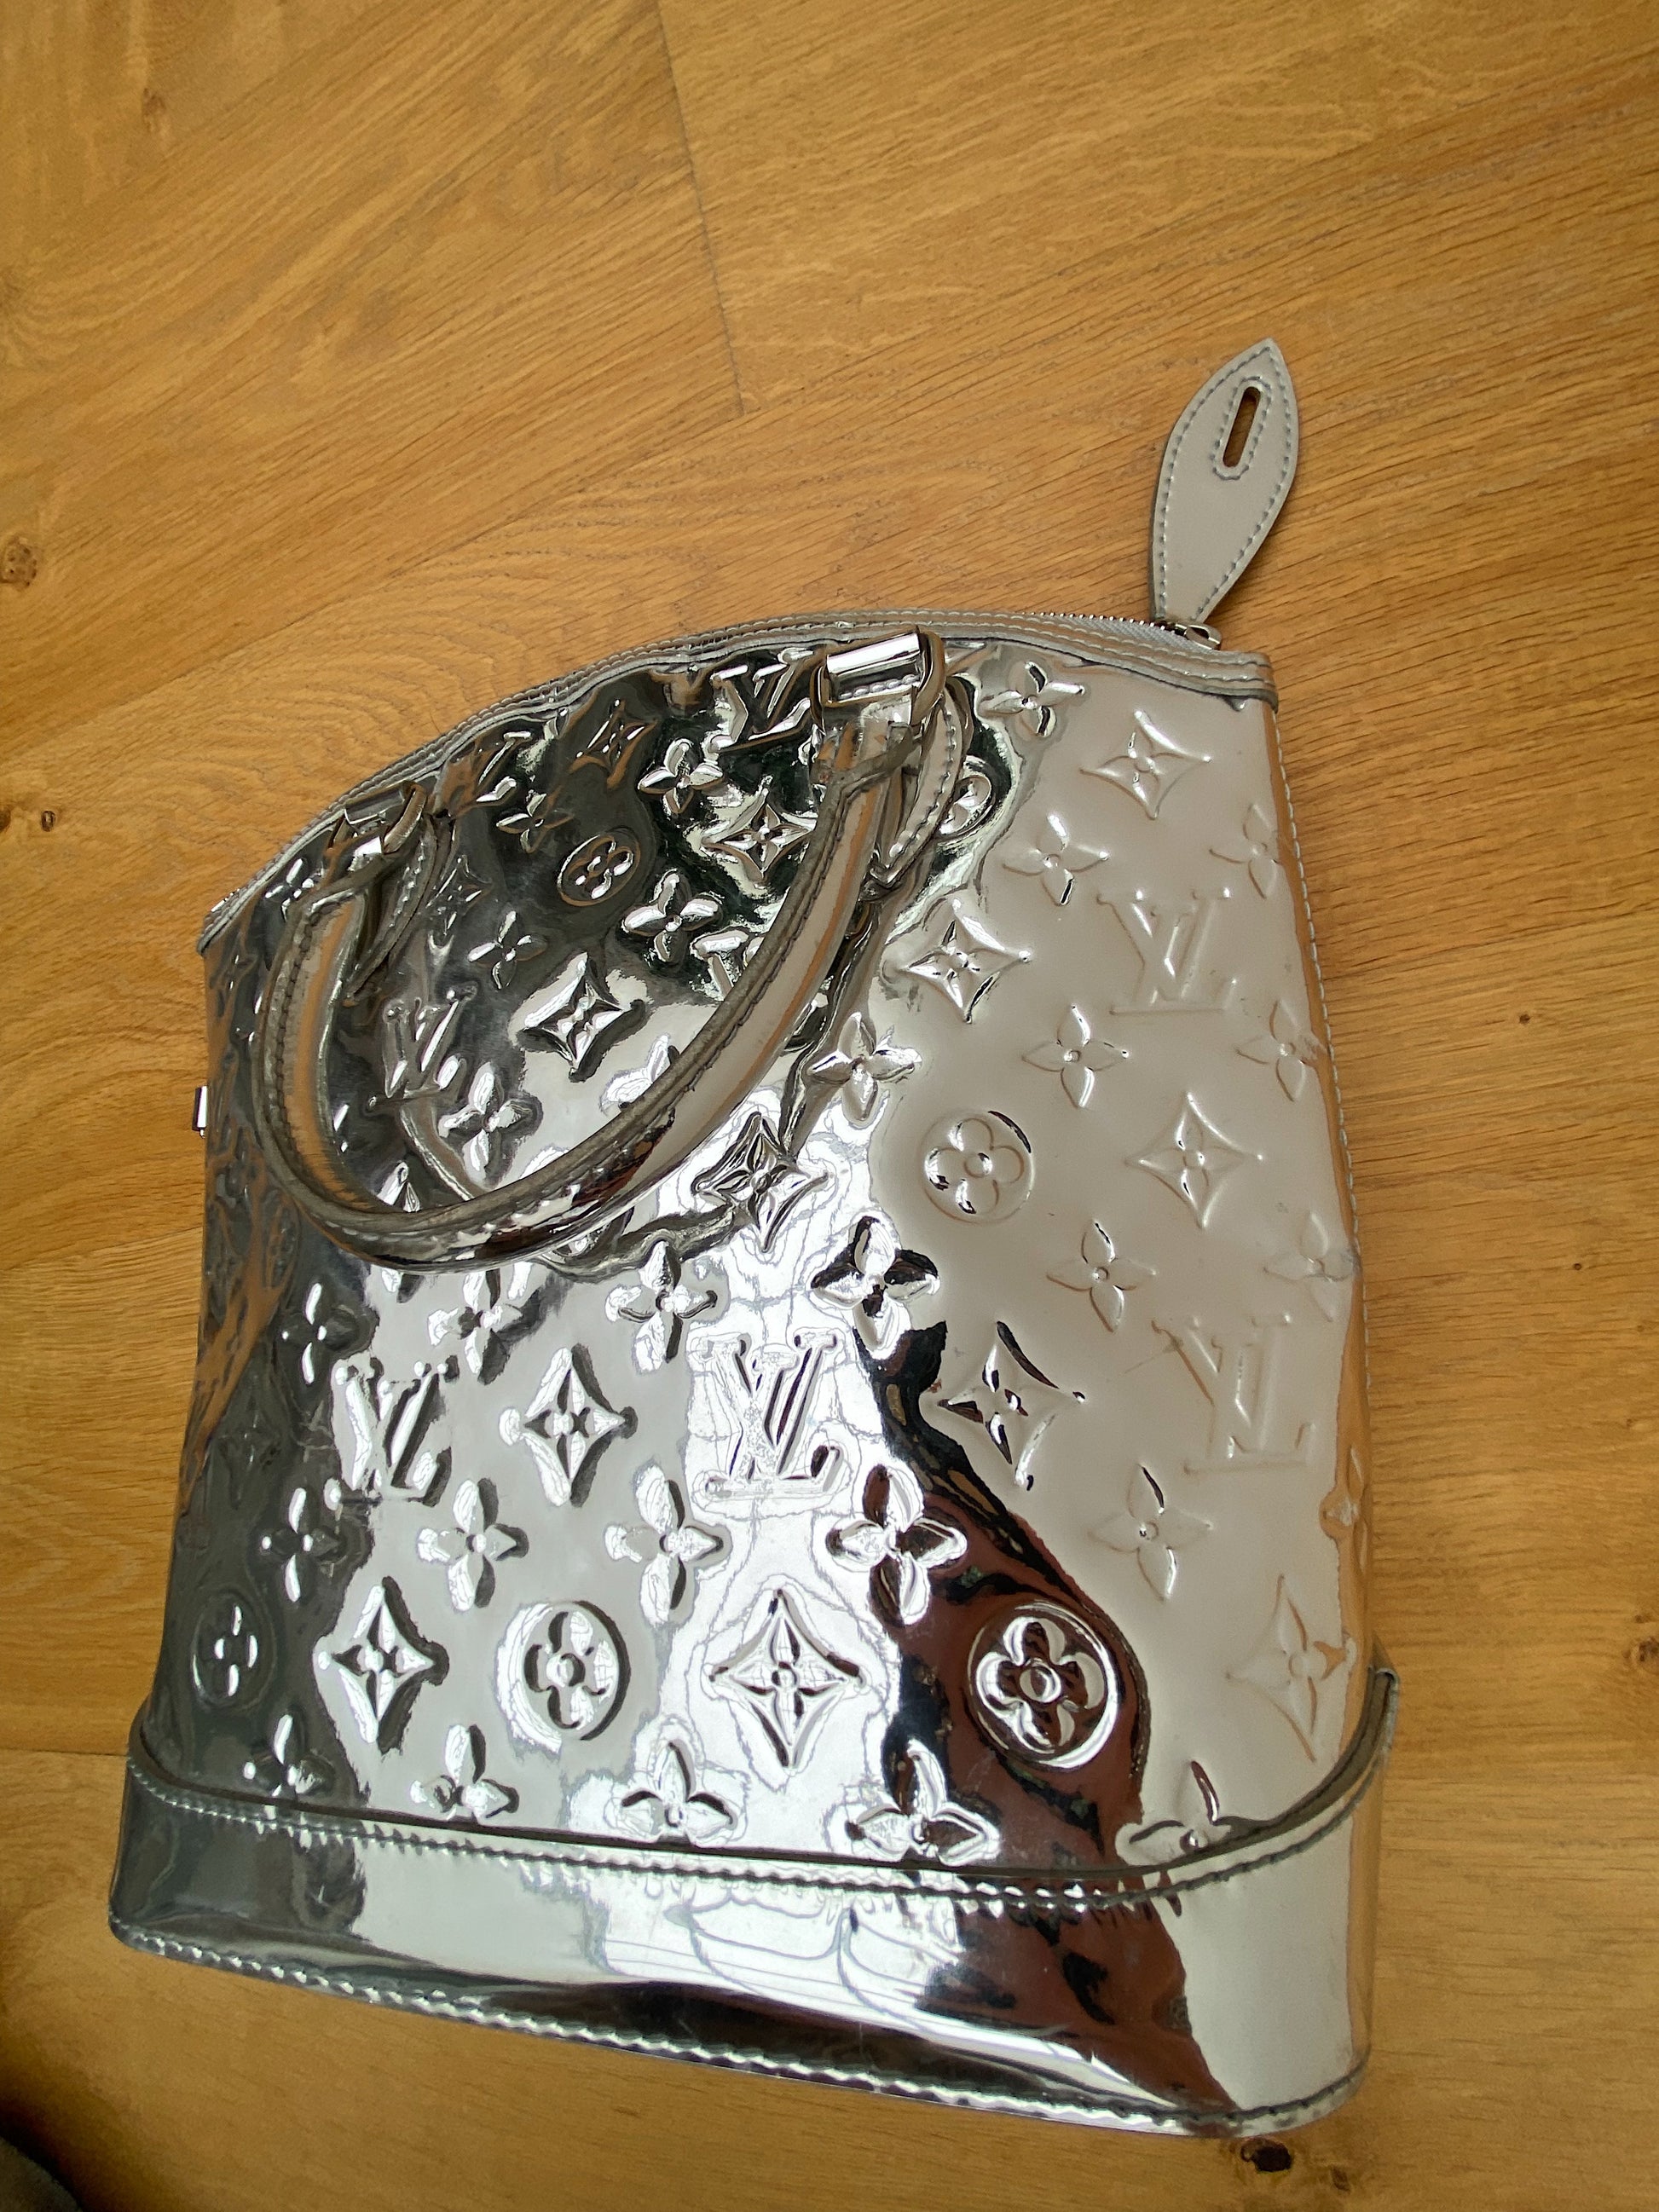 Louis Vuitton Lockit Handbag 395070